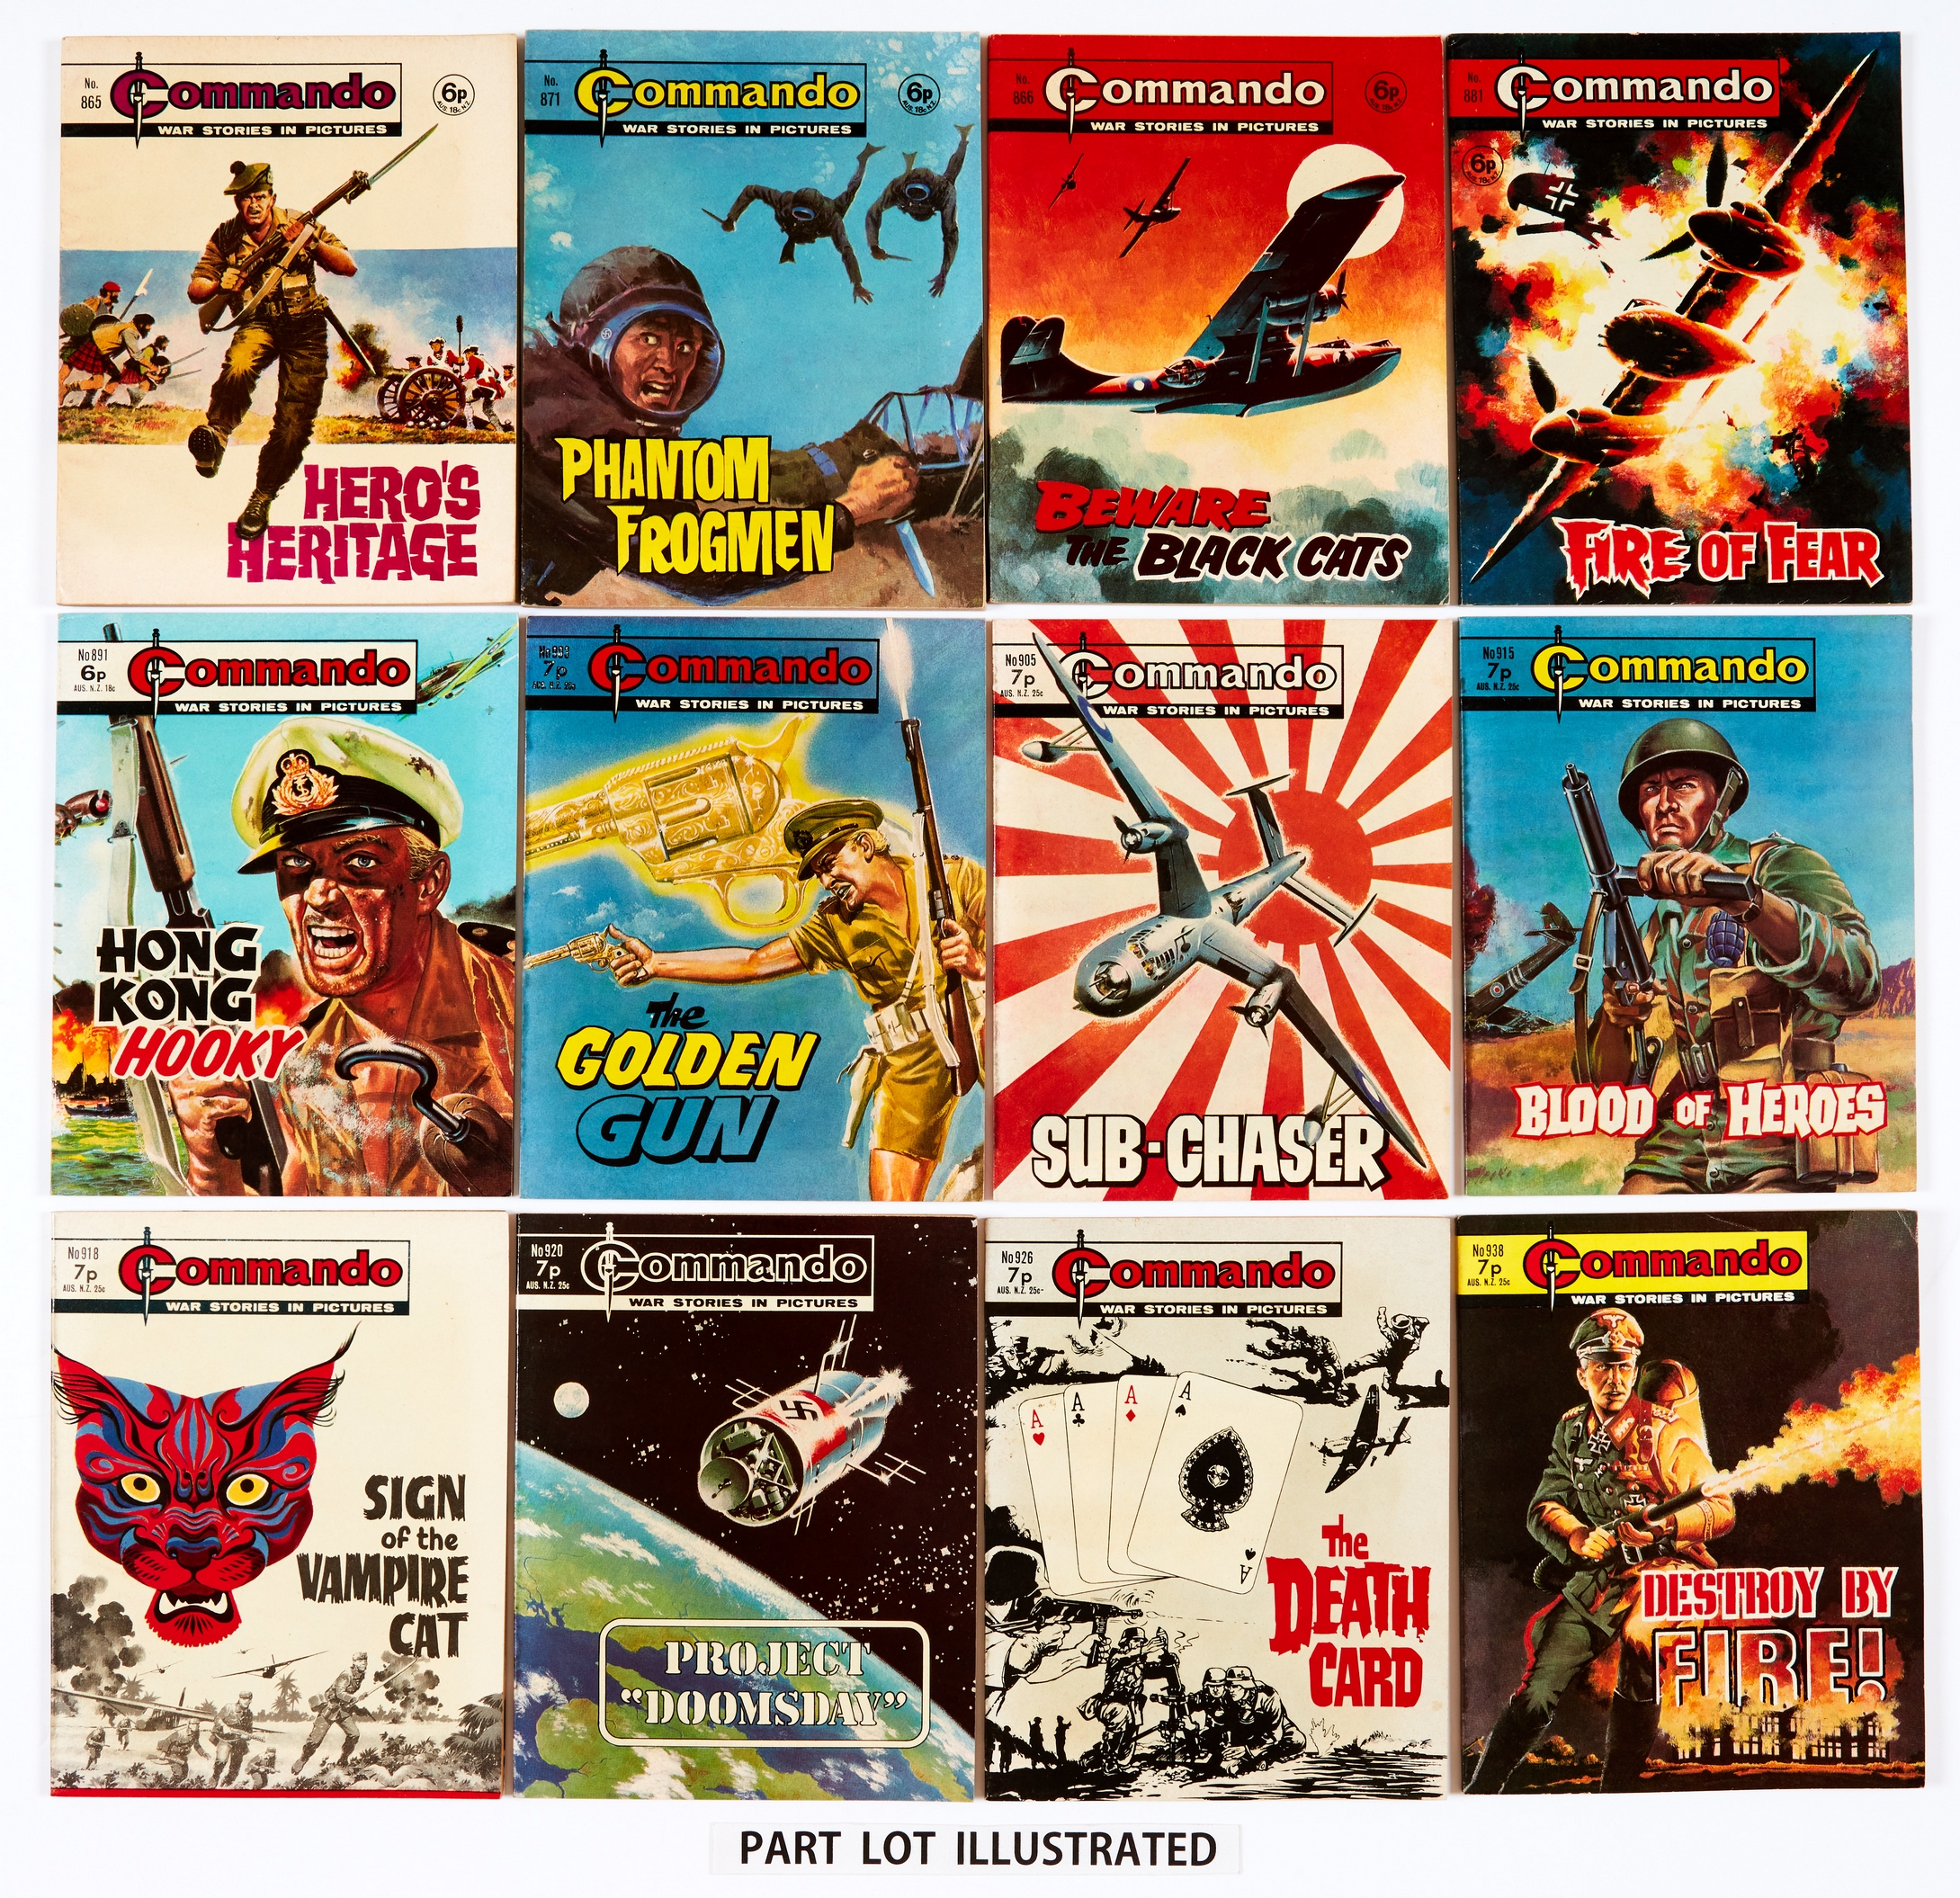 Commando War Stories in Pictures (1974-76) 865-1018 [vfn/nm] (154)